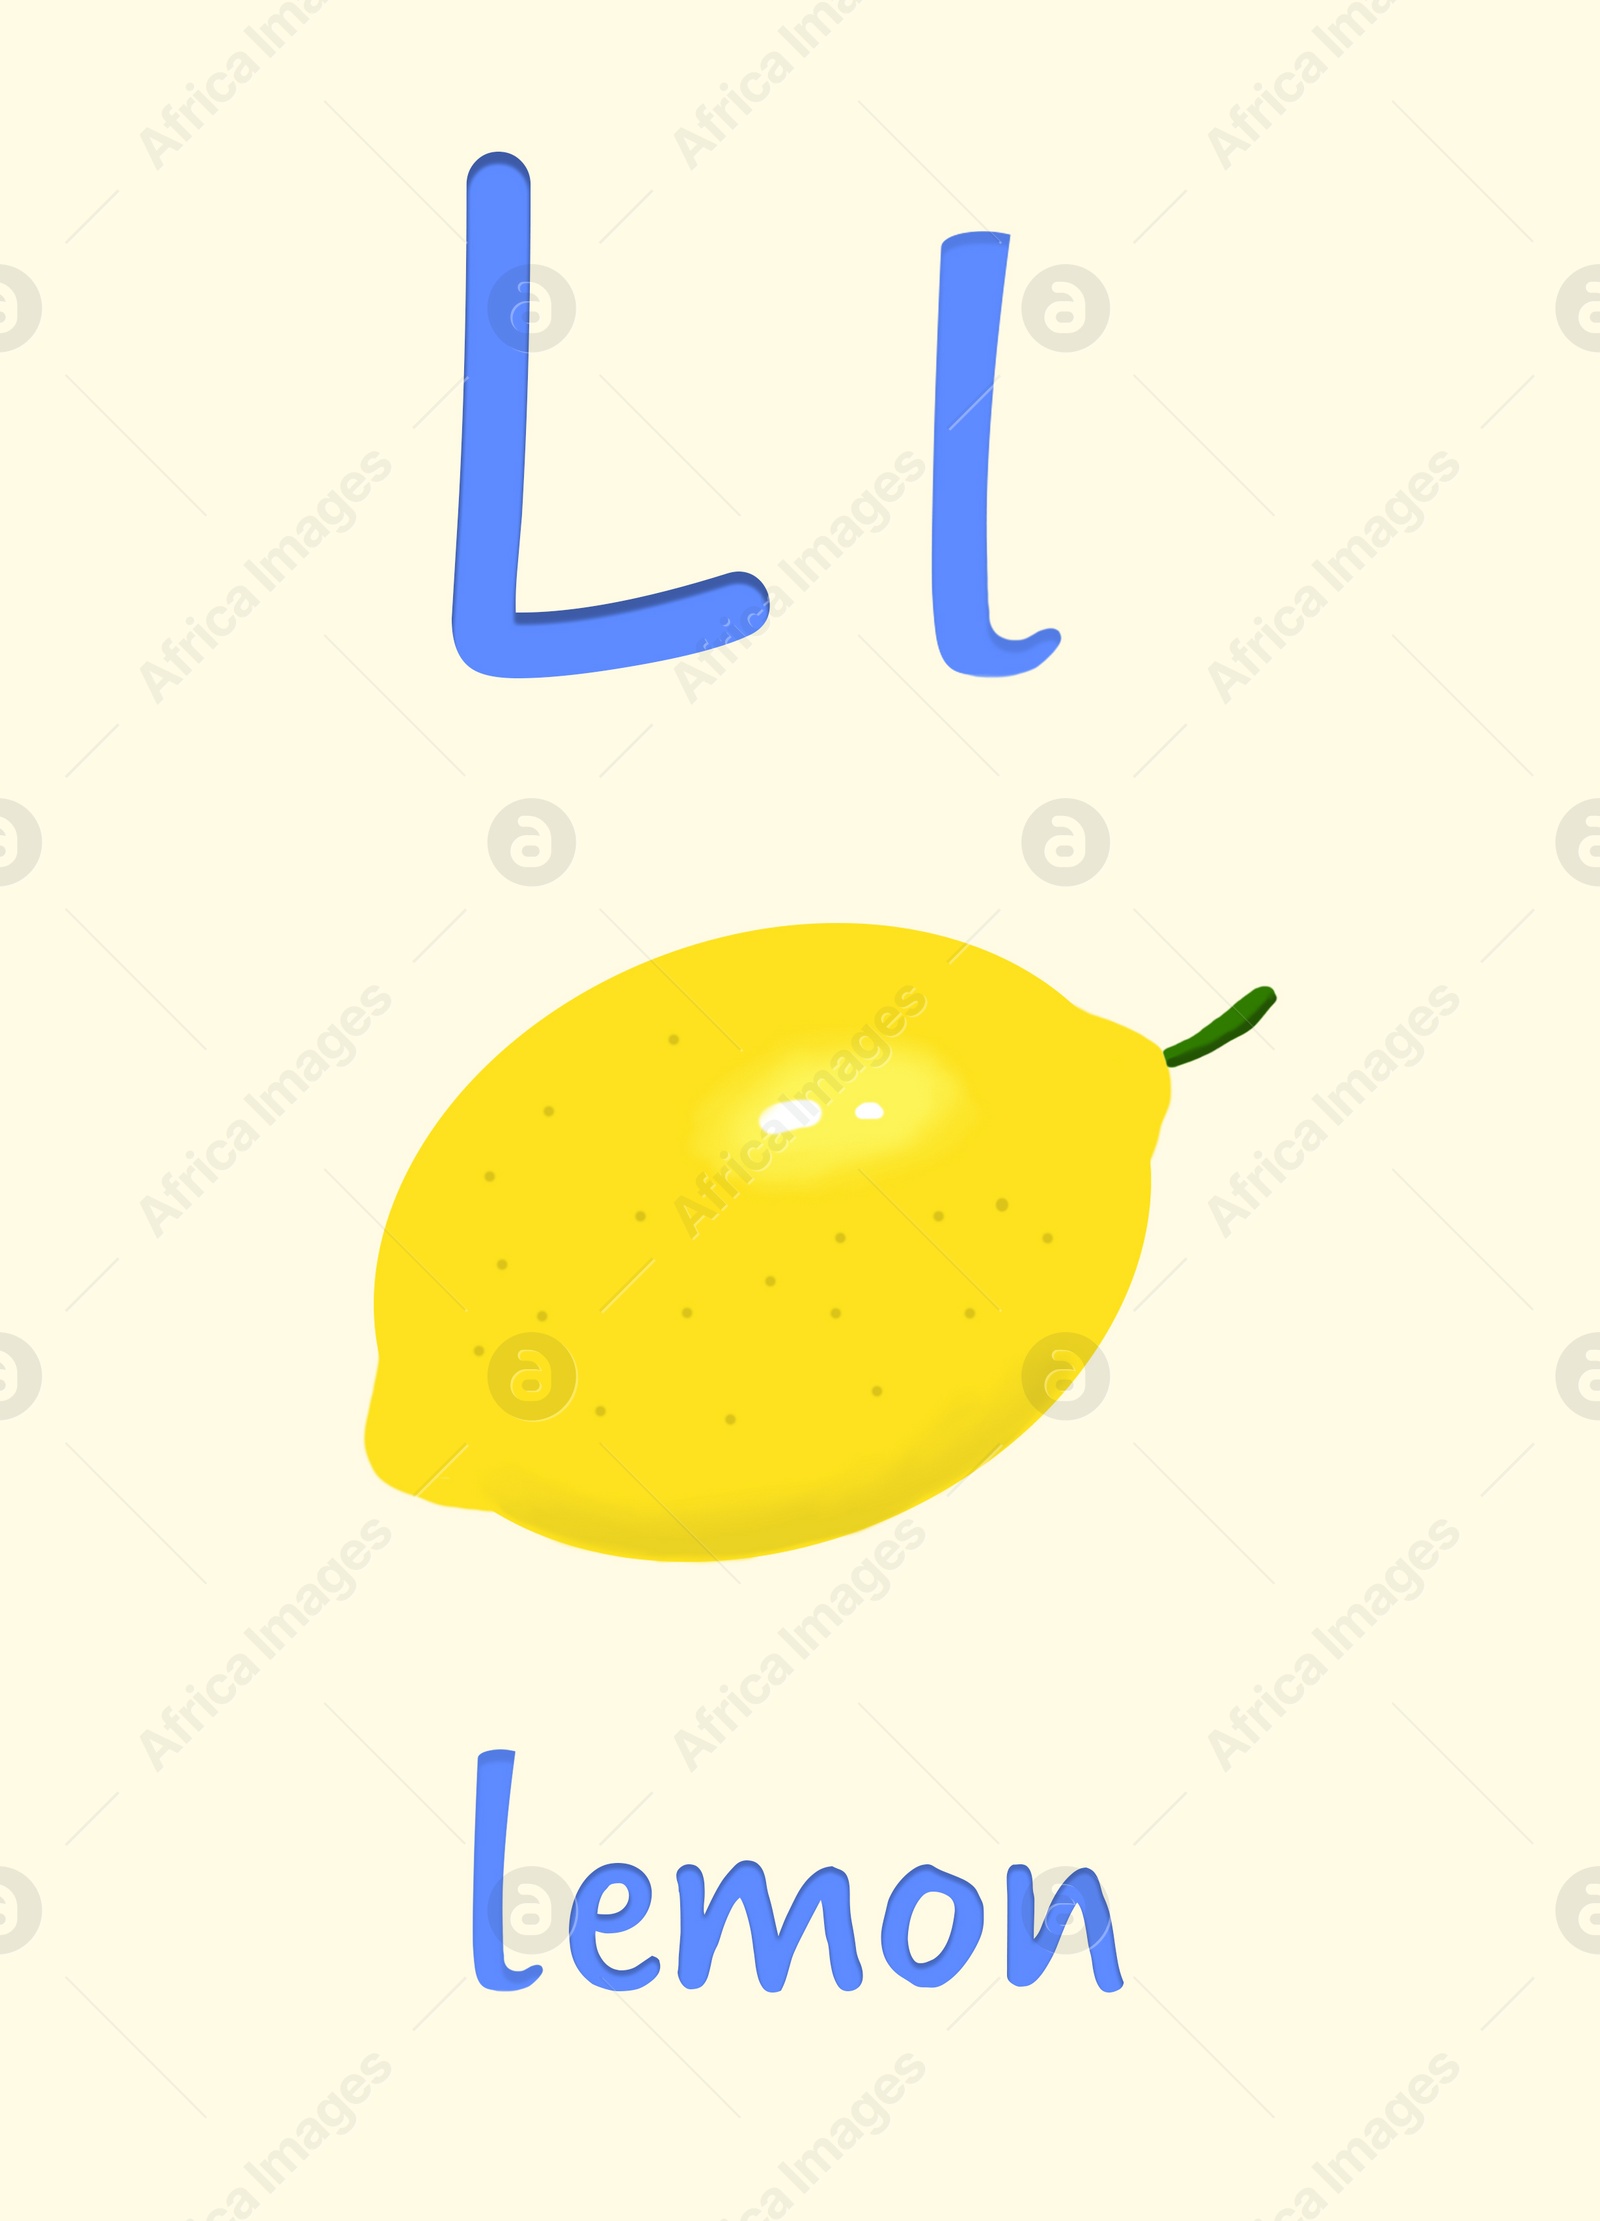 Illustration of Learning English alphabet. Card with letter L and lemon, illustration